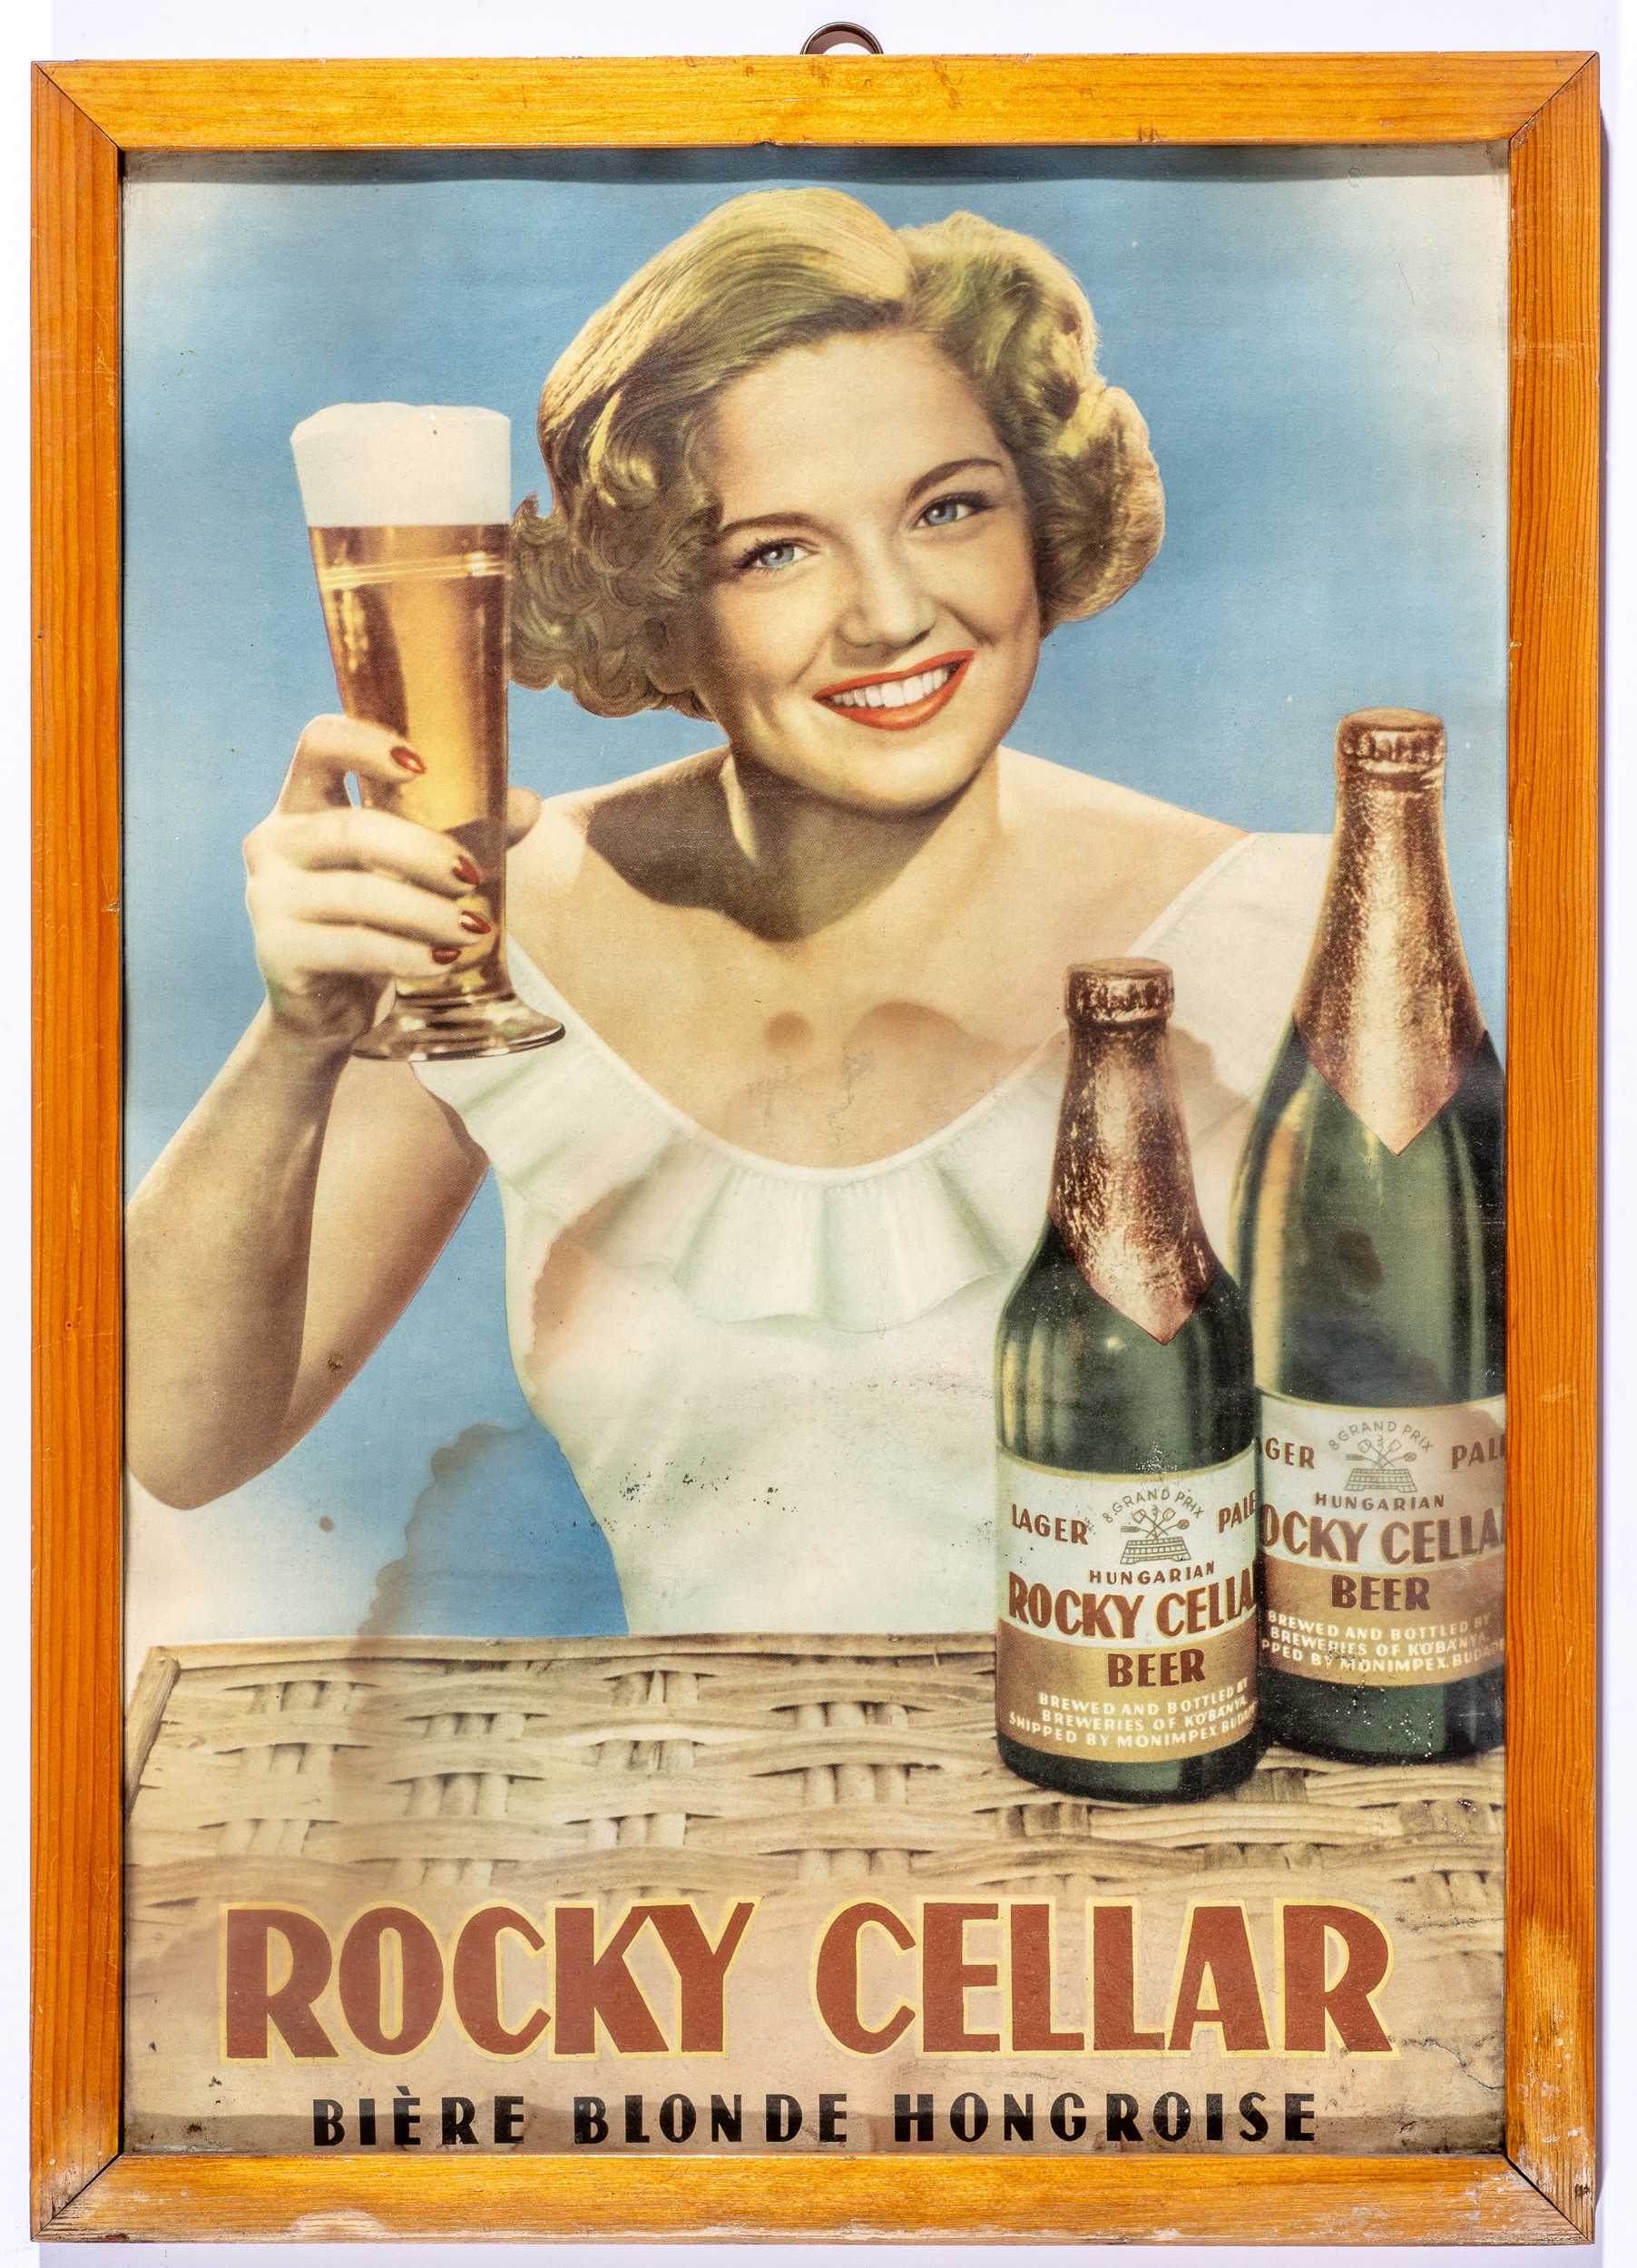 Rocly cellár sör export,plakát (Söripari Emléktár - Dreher Sörmúzeum CC BY-NC-SA)